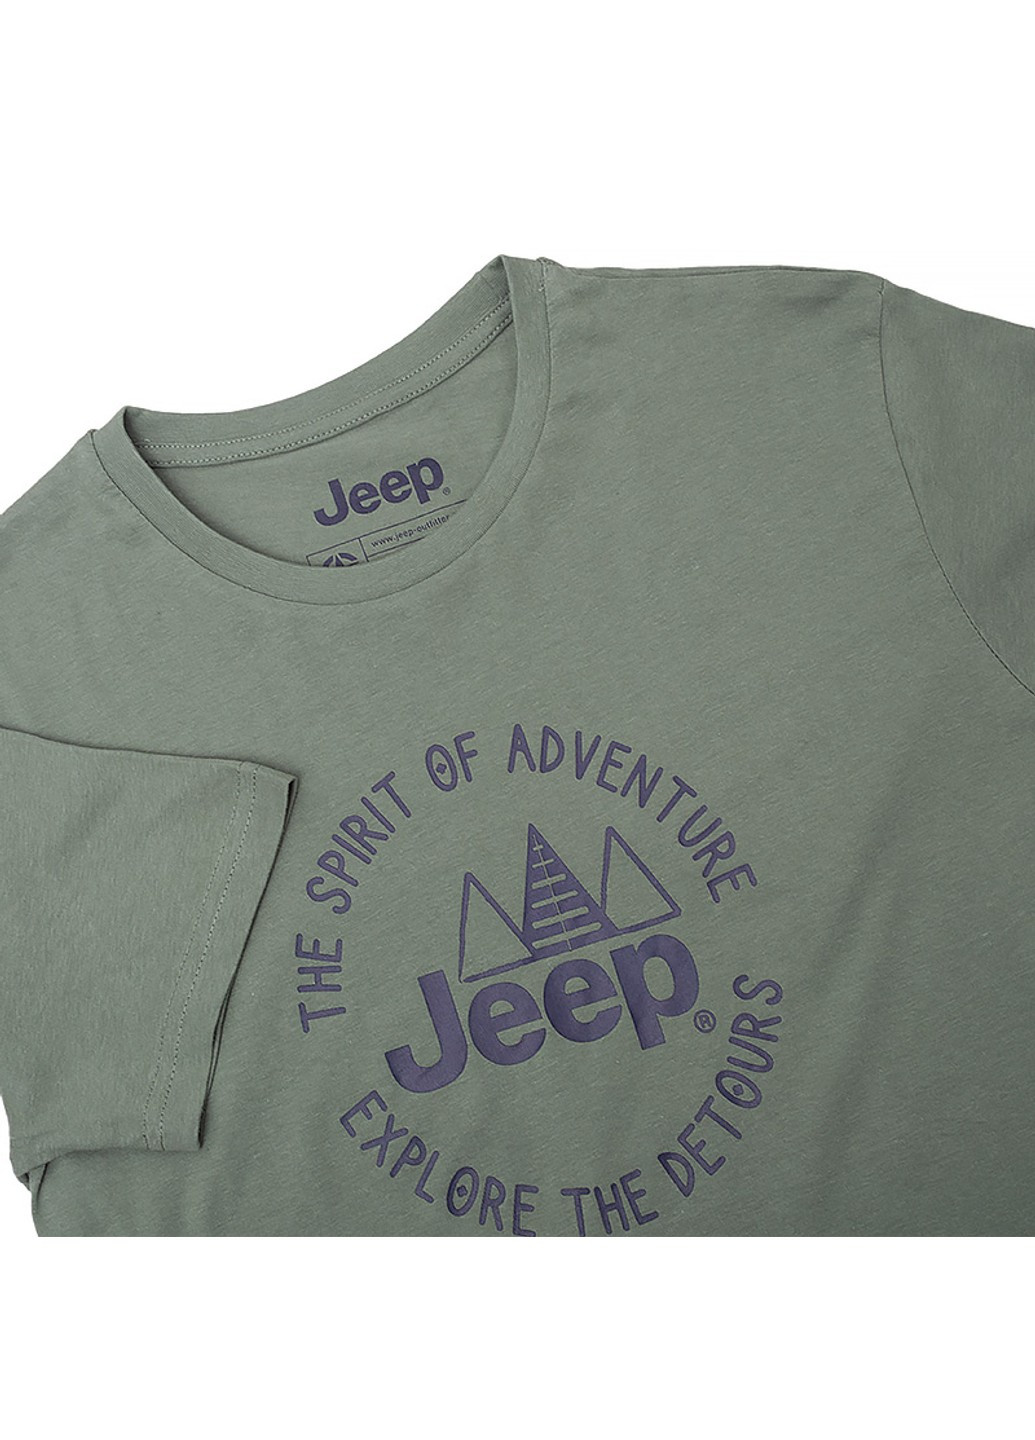 Хаки (оливковая) футболка t-shirt the spirit of adventure Jeep